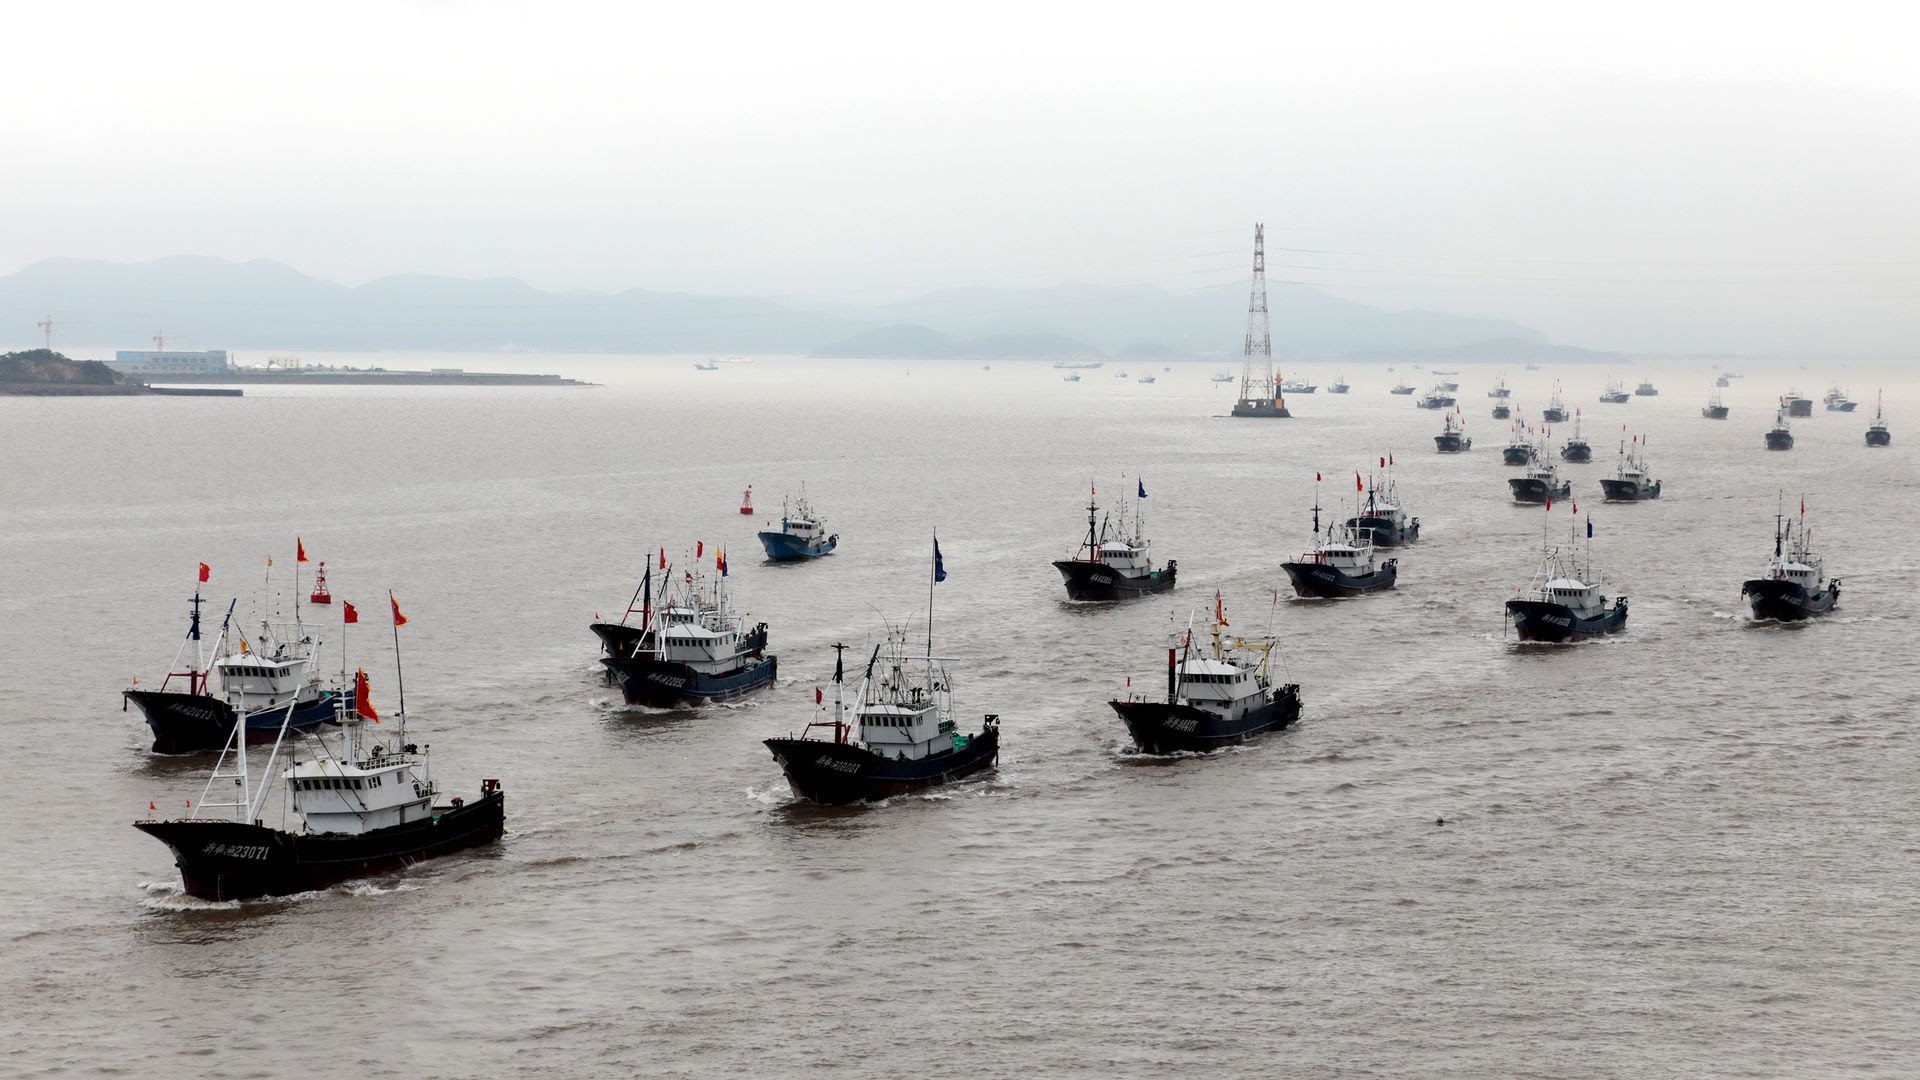 A fleet of ships on the ocean